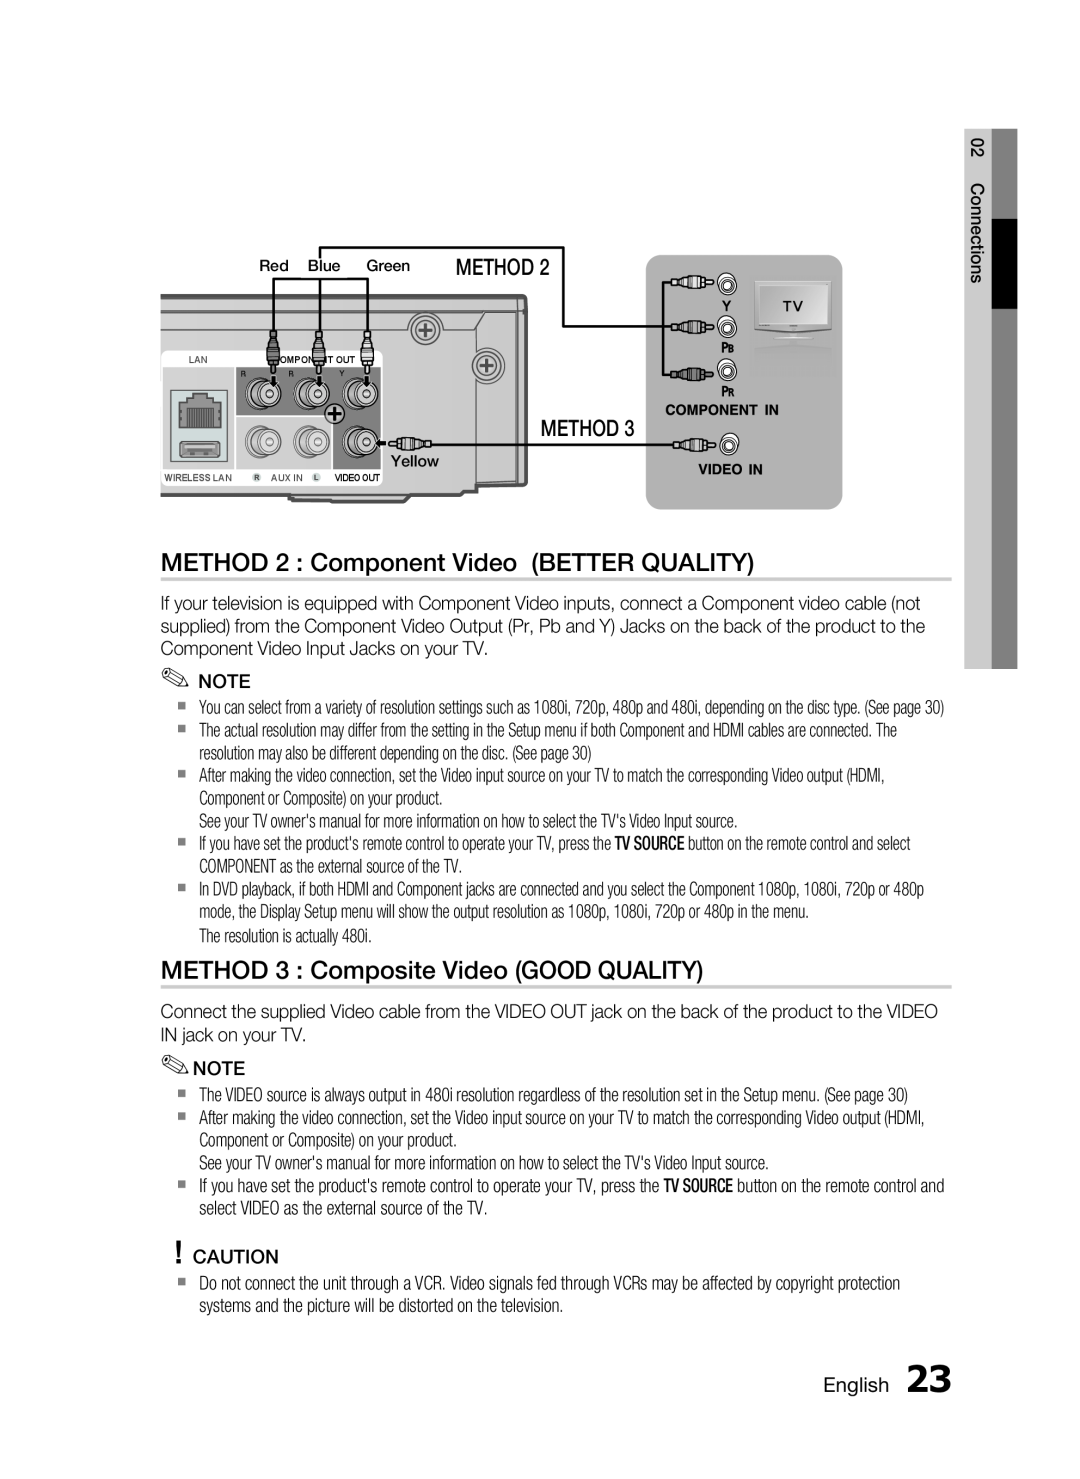 Samsung AH68-02258S METHOD 2 Component Video BETTER QUALITY, METHOD 3 Composite Video GOOD QUALITY, Method, English 